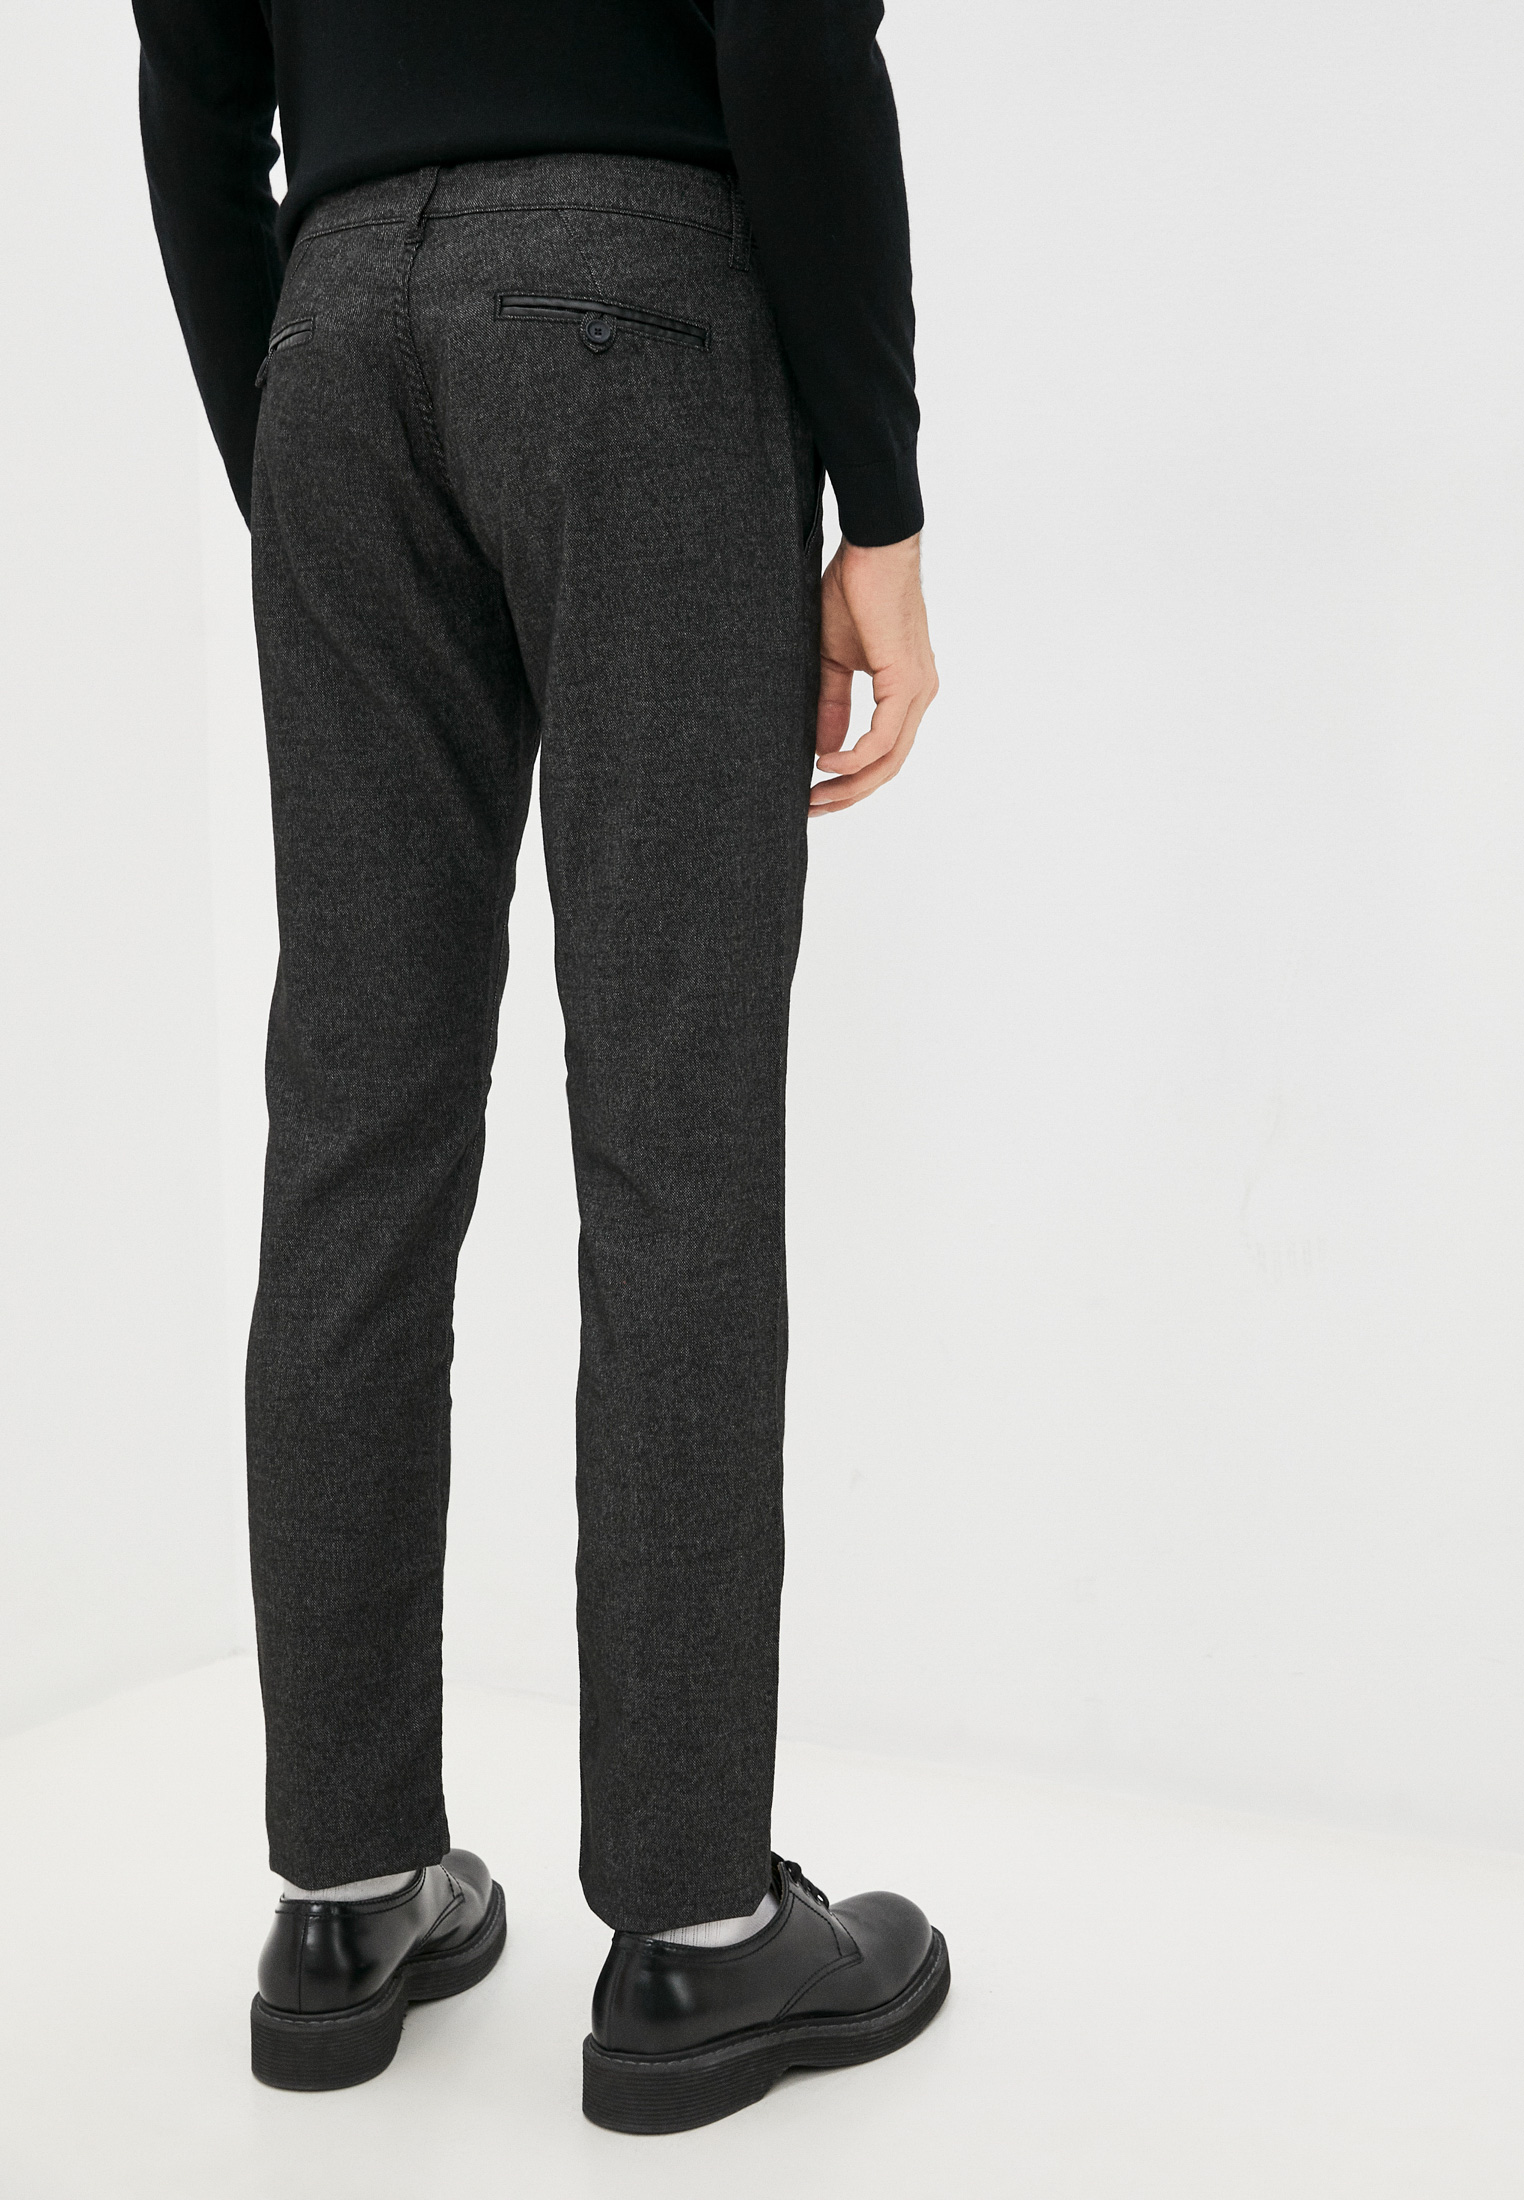 Мужские брюки Karl Lagerfeld (Карл Лагерфельд) 512816-255836: изображение 4